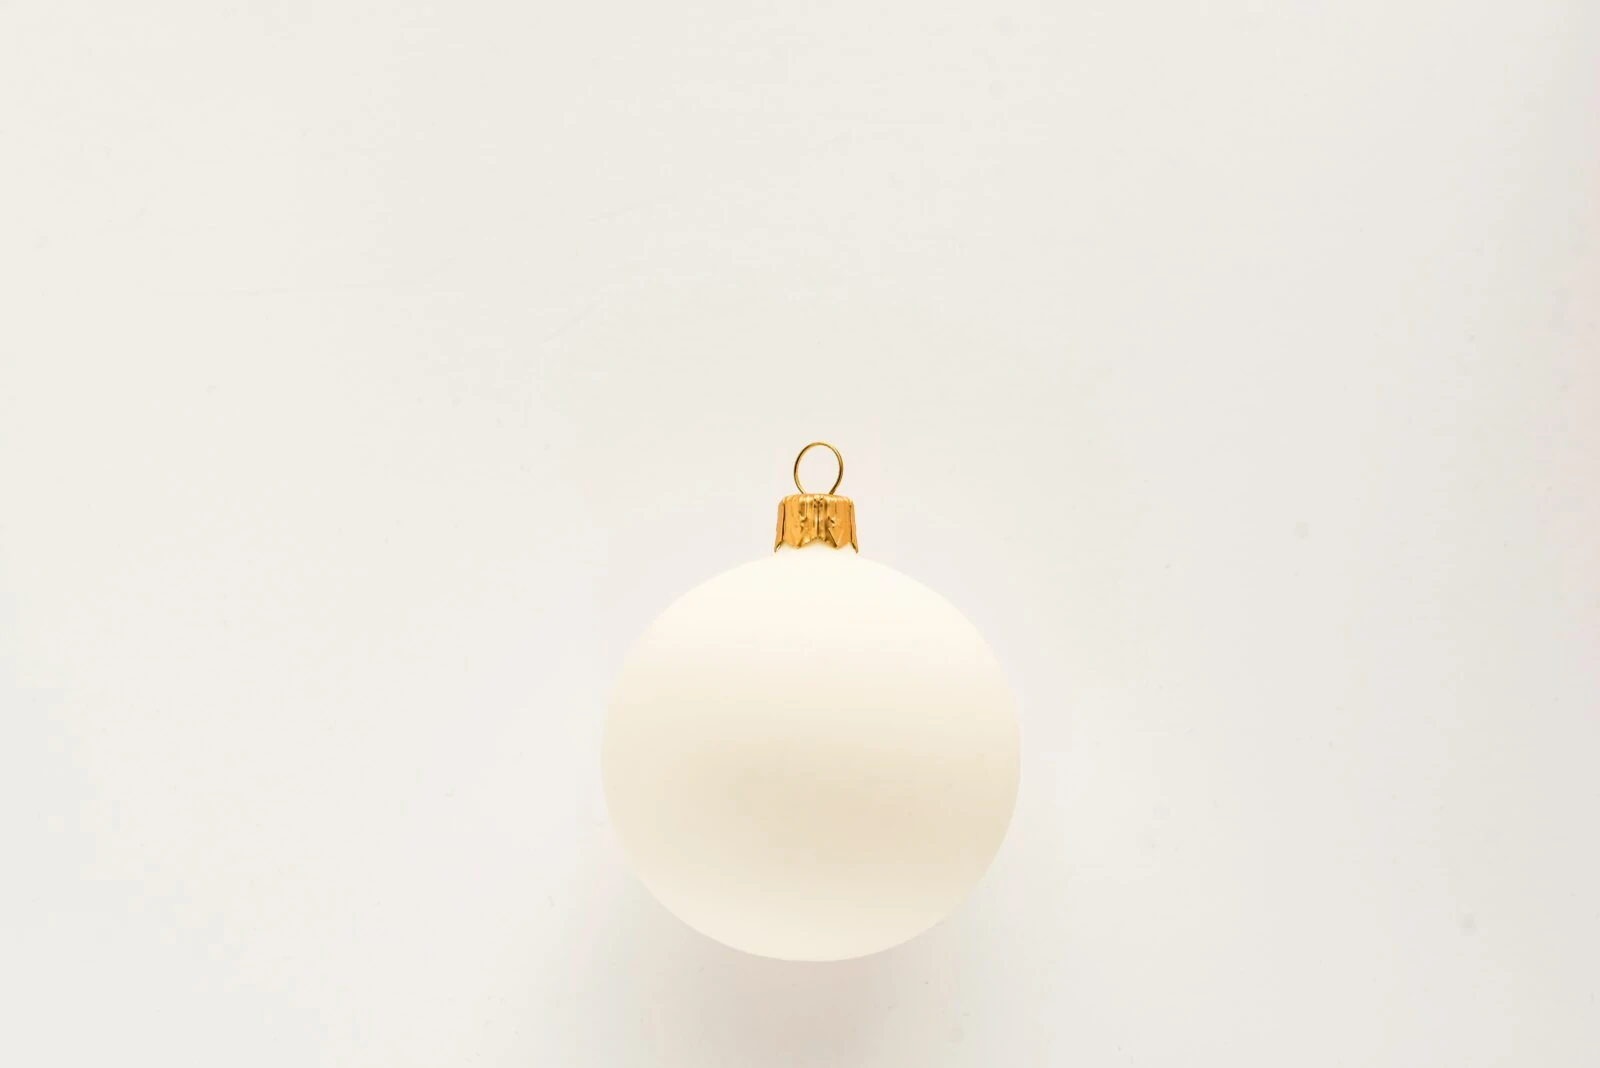 Image of Christmas ornament for printing